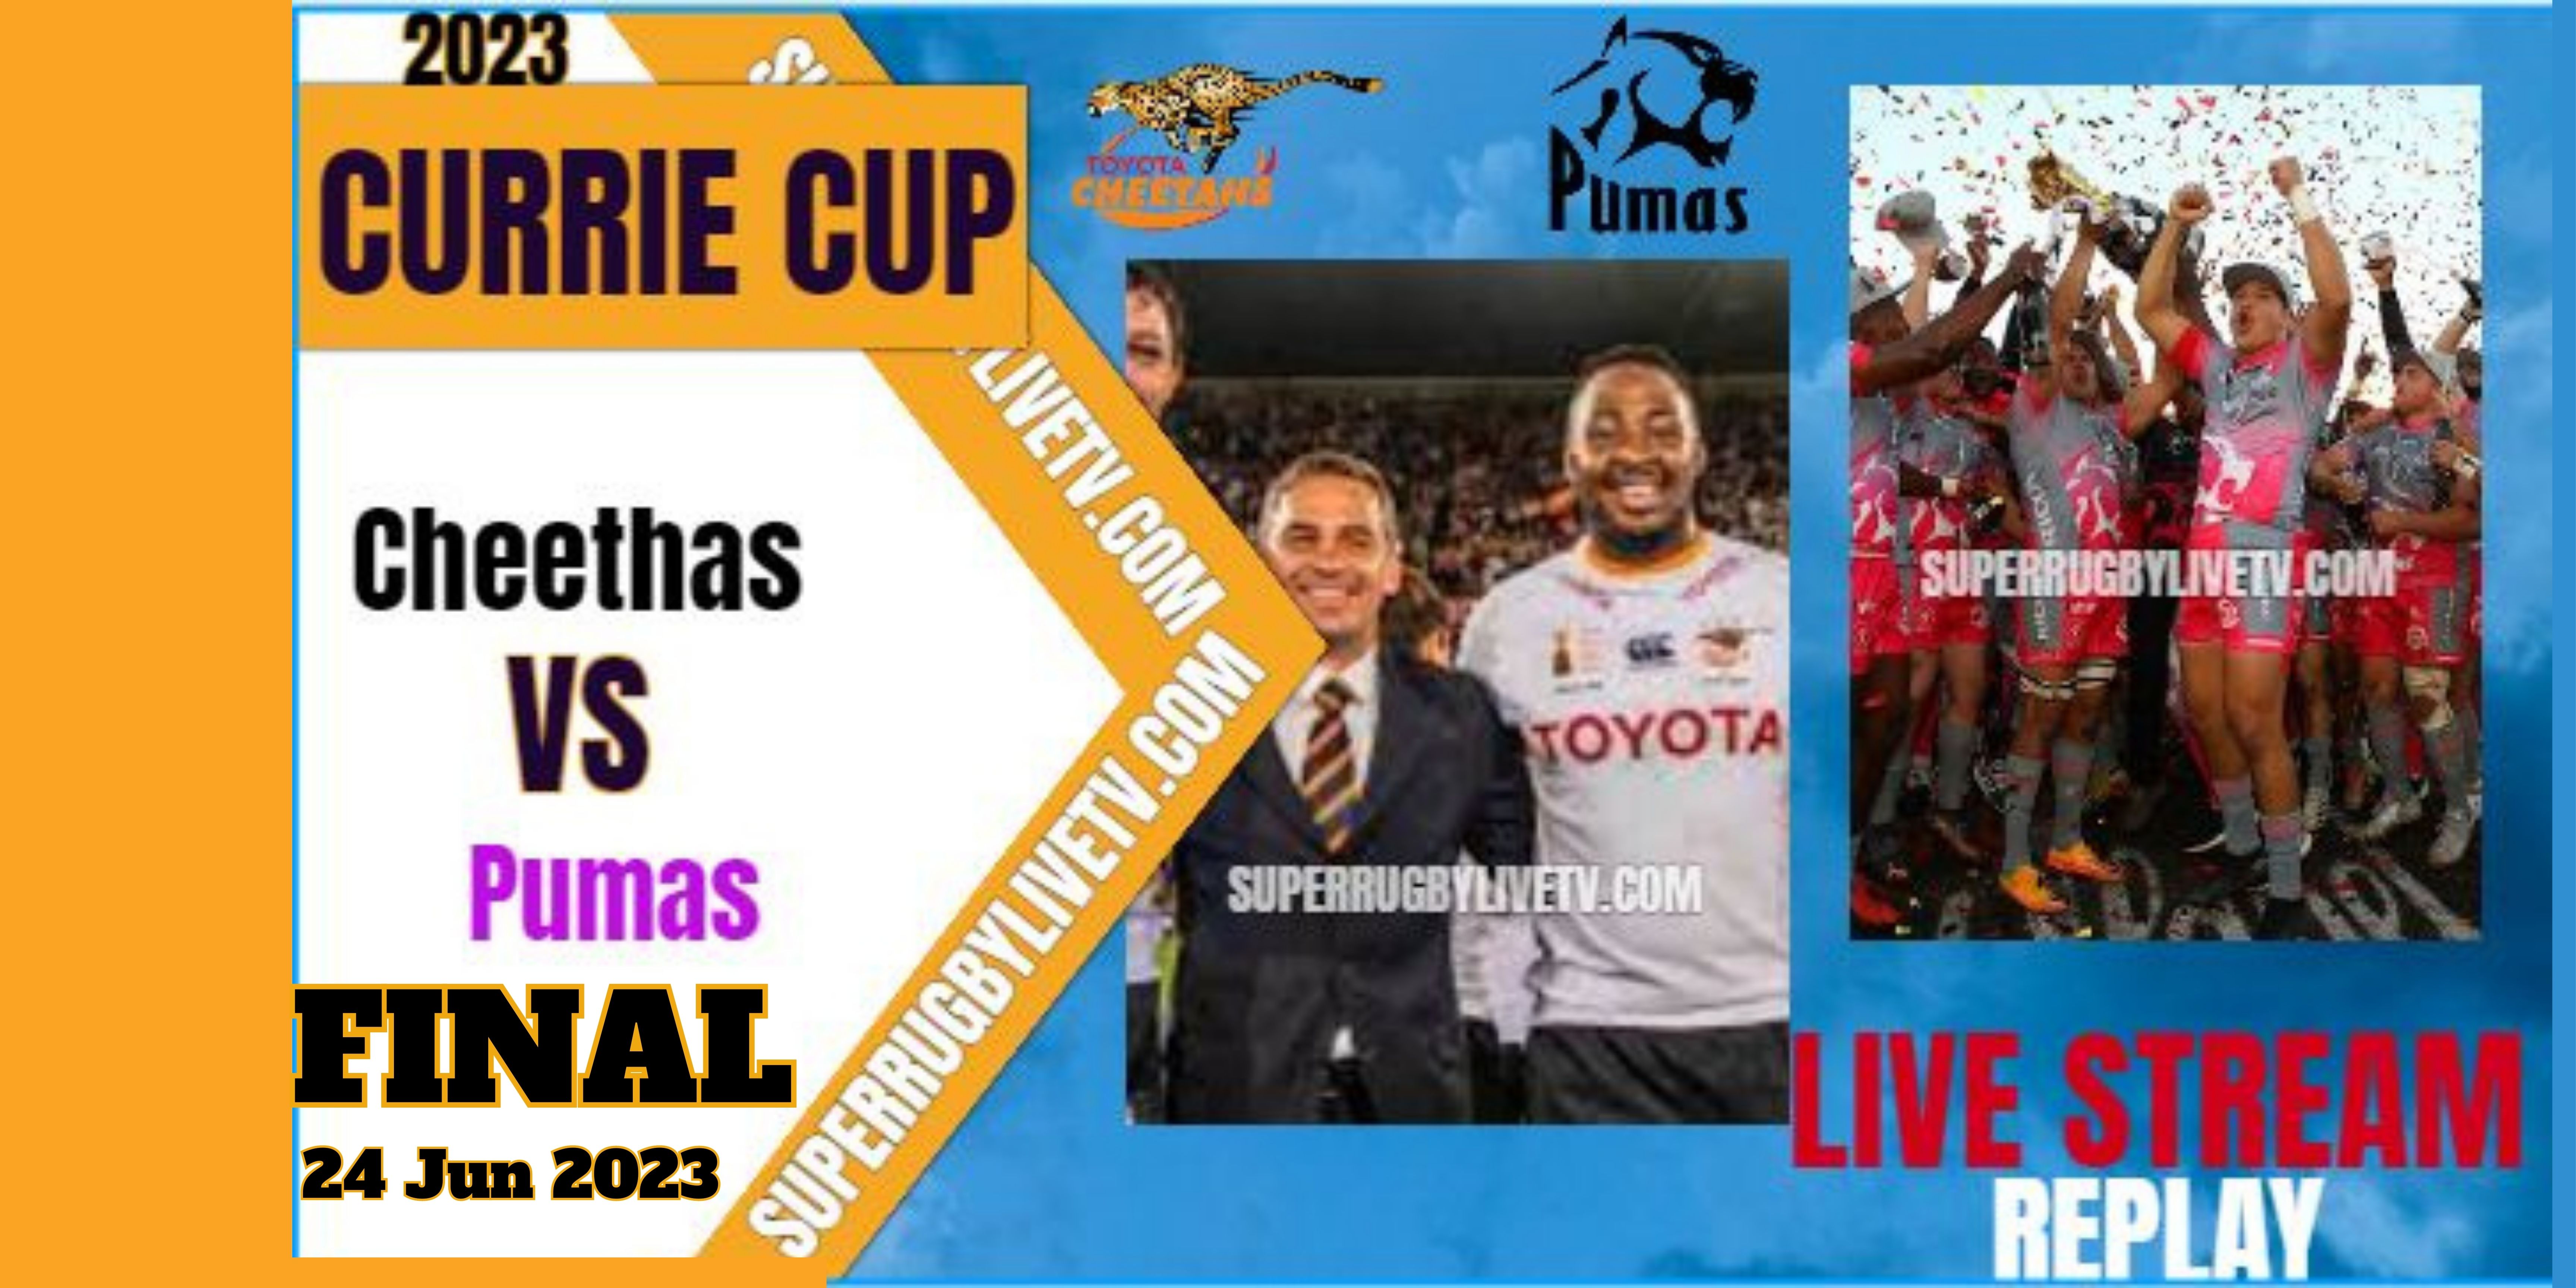 Cheetahs Vs Pumas Final Currie Cup Live Streaming 2023